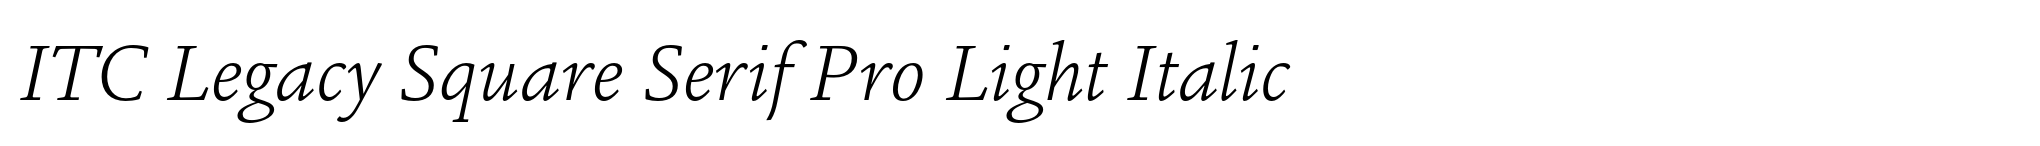 ITC Legacy Square Serif Pro Light Italic image